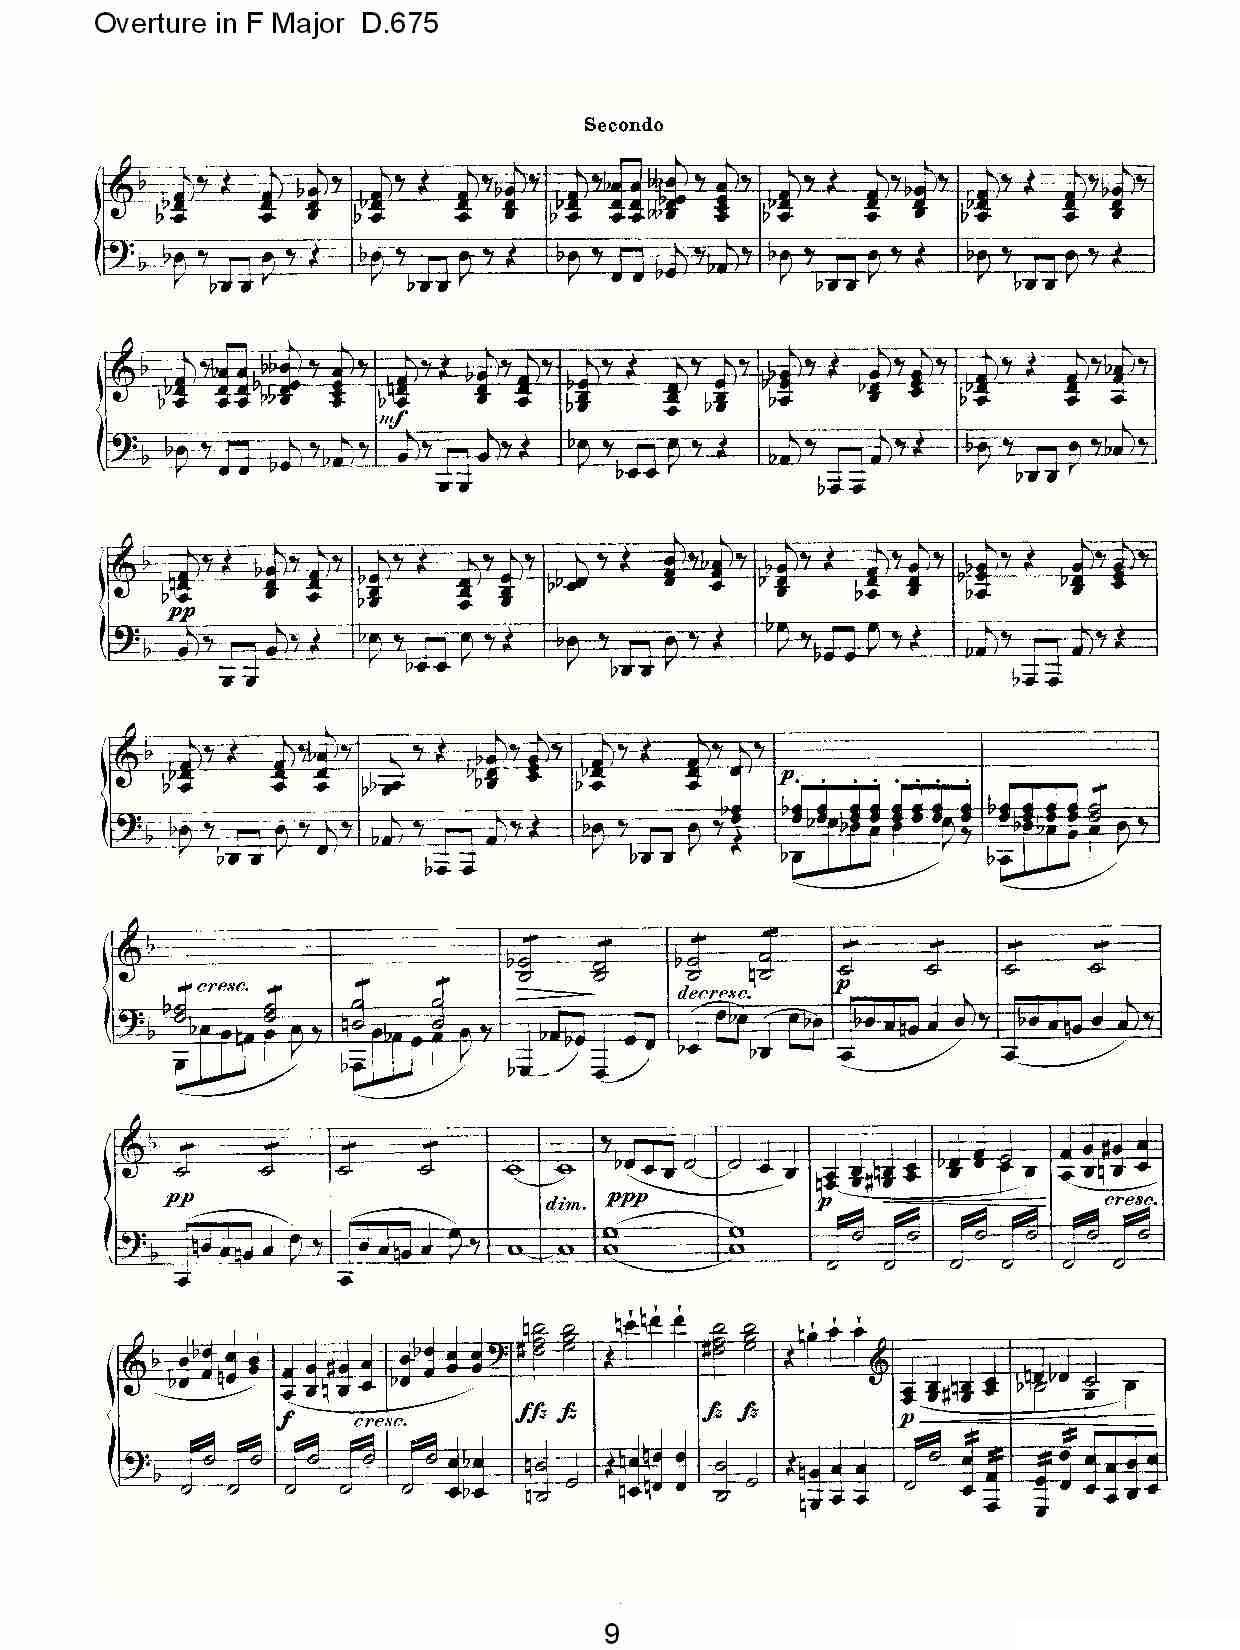 Overture in F Major D.675（Ｆ大调序曲 D.675）钢琴曲谱（图9）